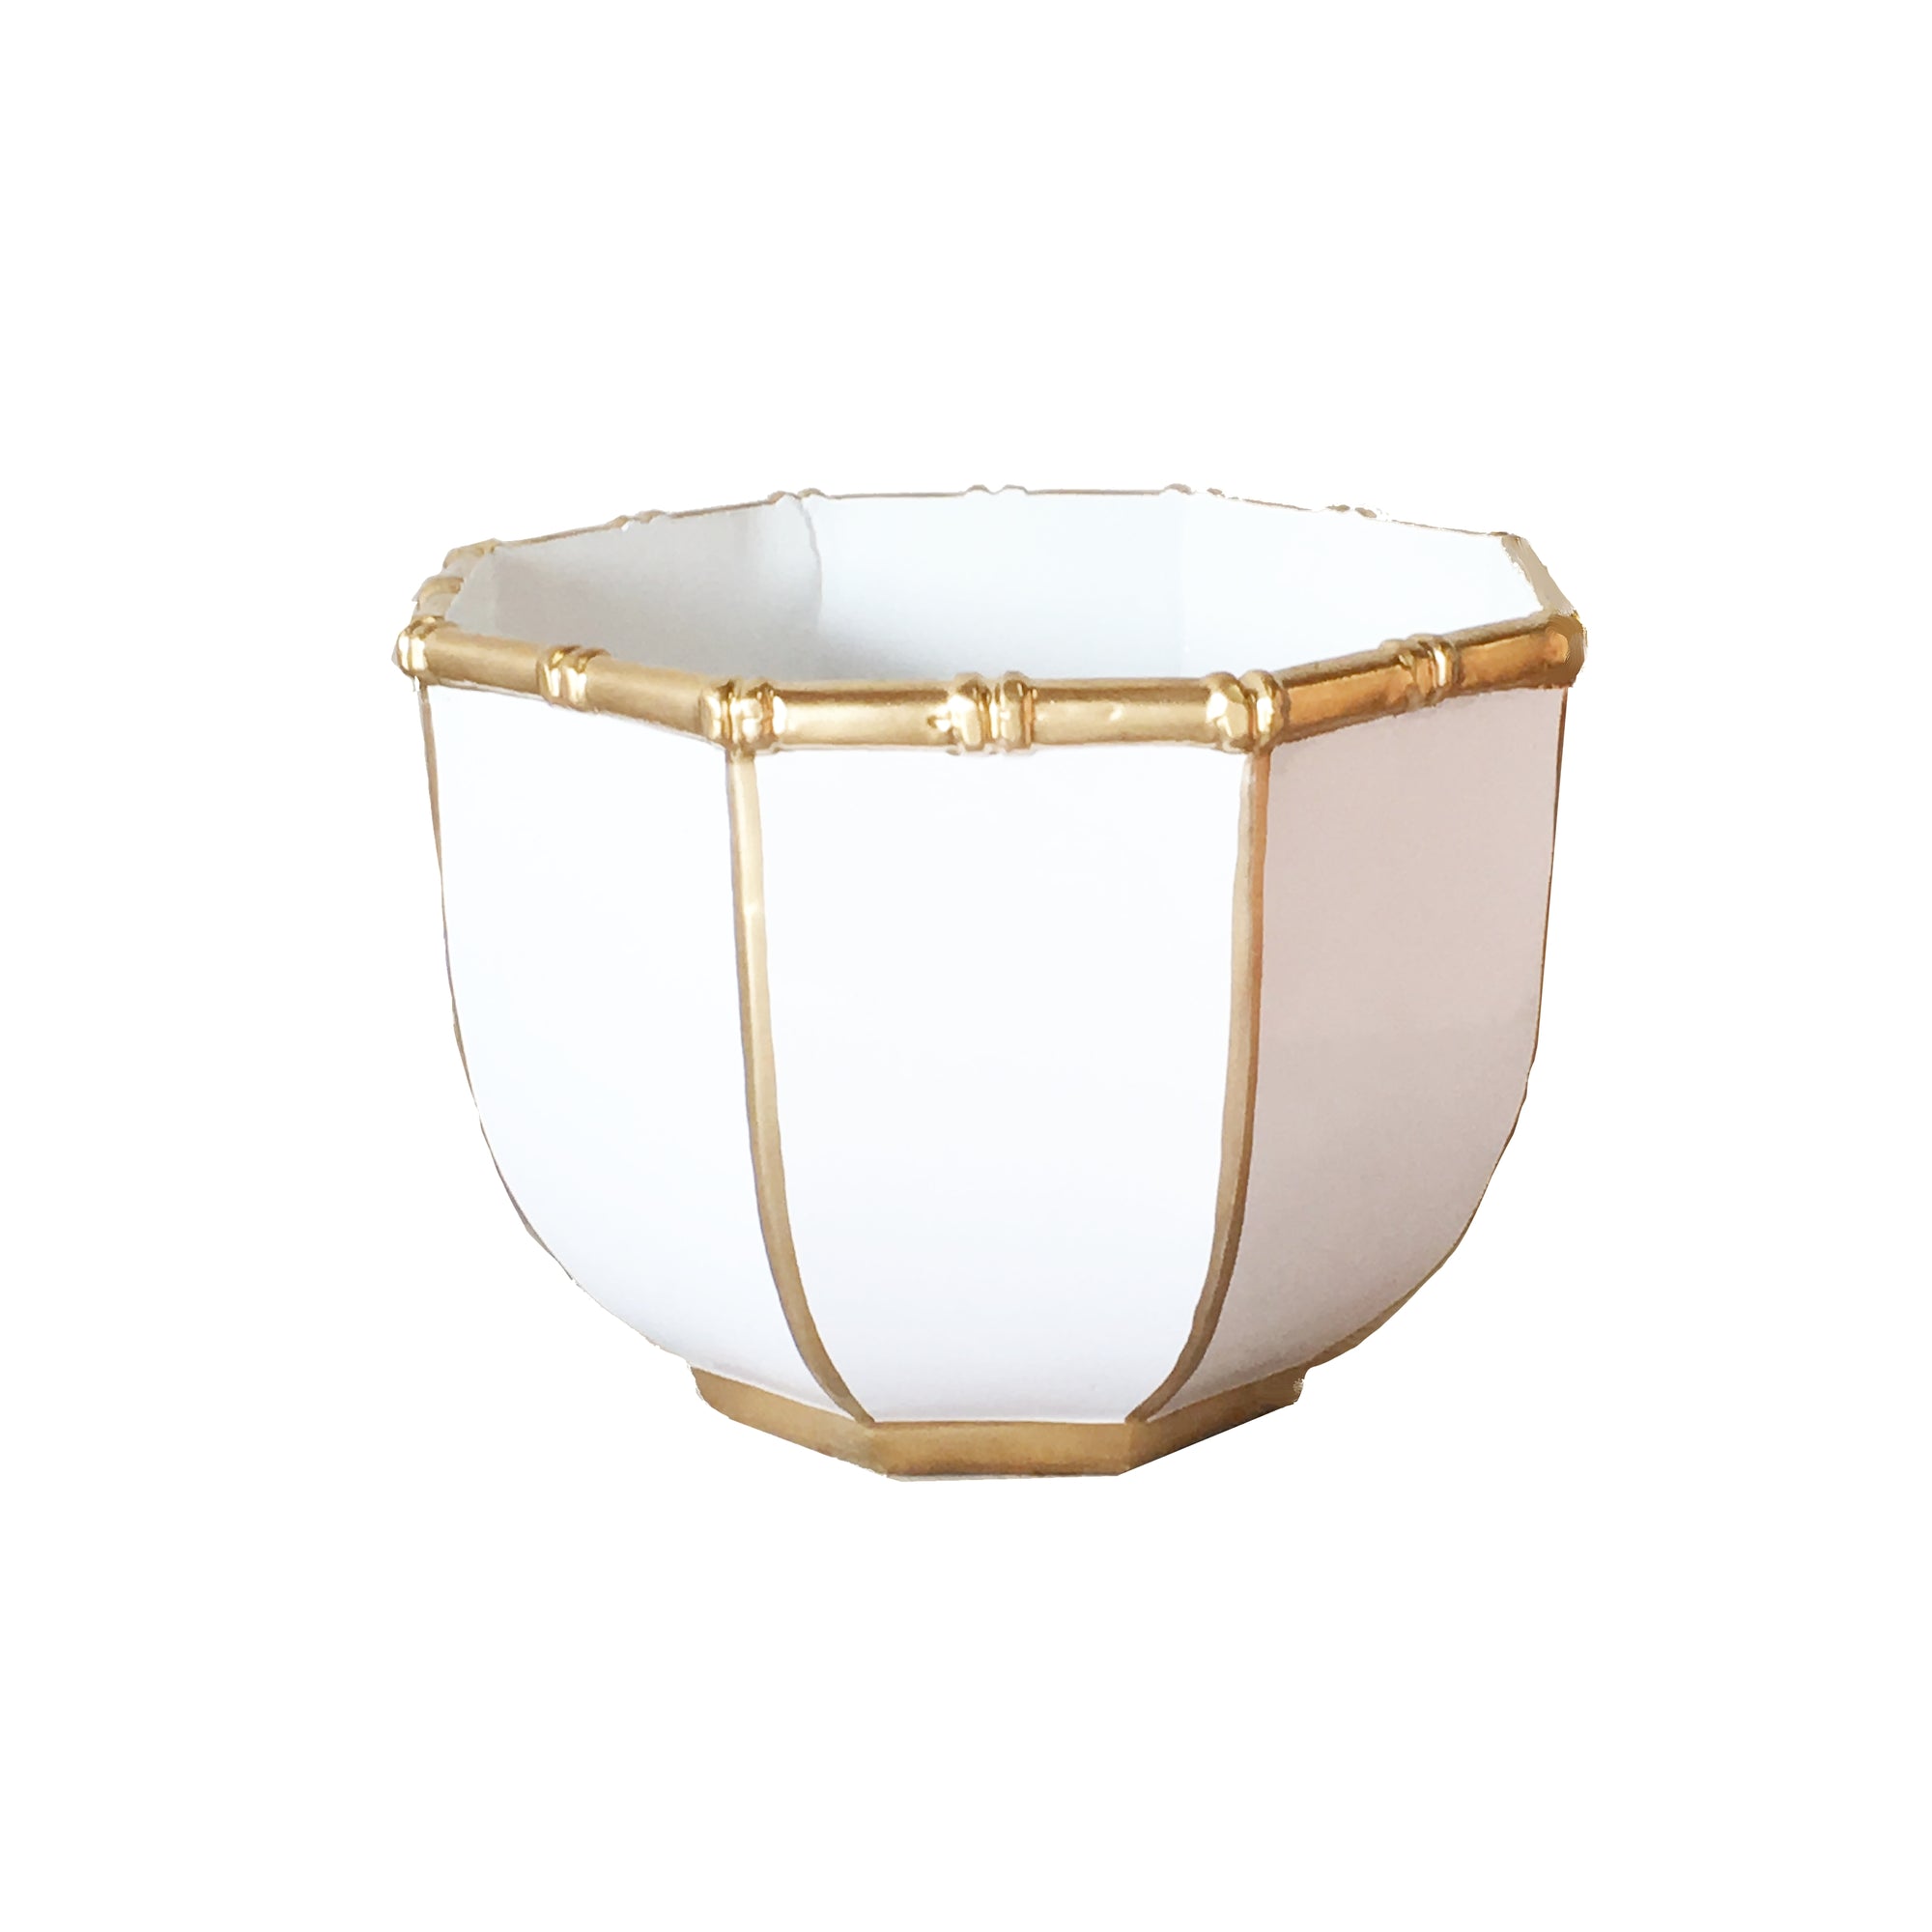 Dana Gibson Bamboo Bowl in White, Large